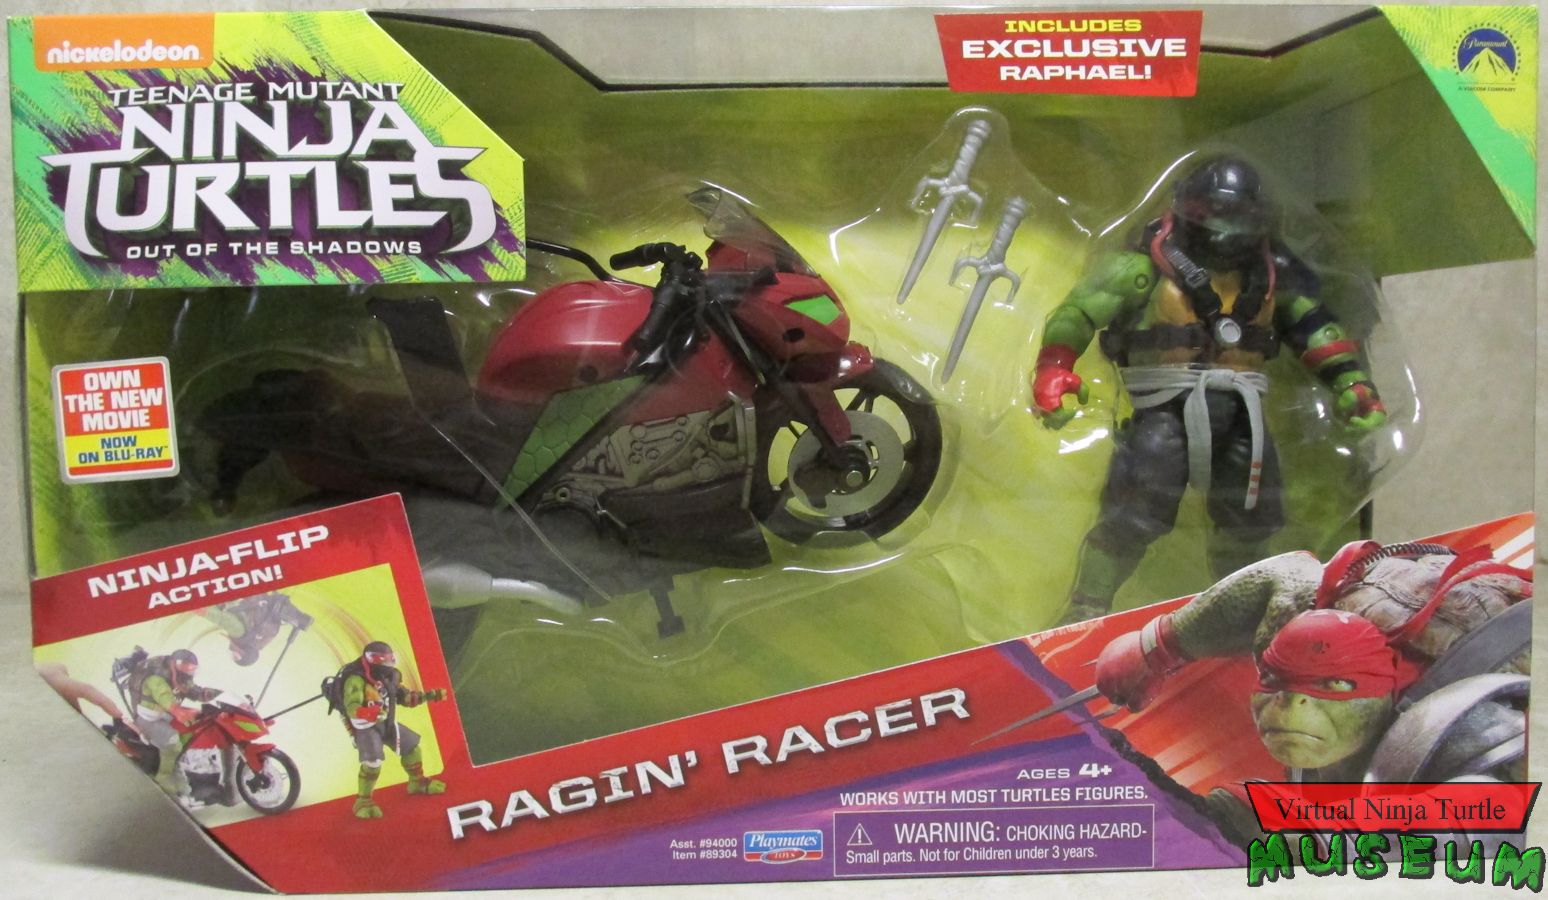 Ragin' Racer MIB front